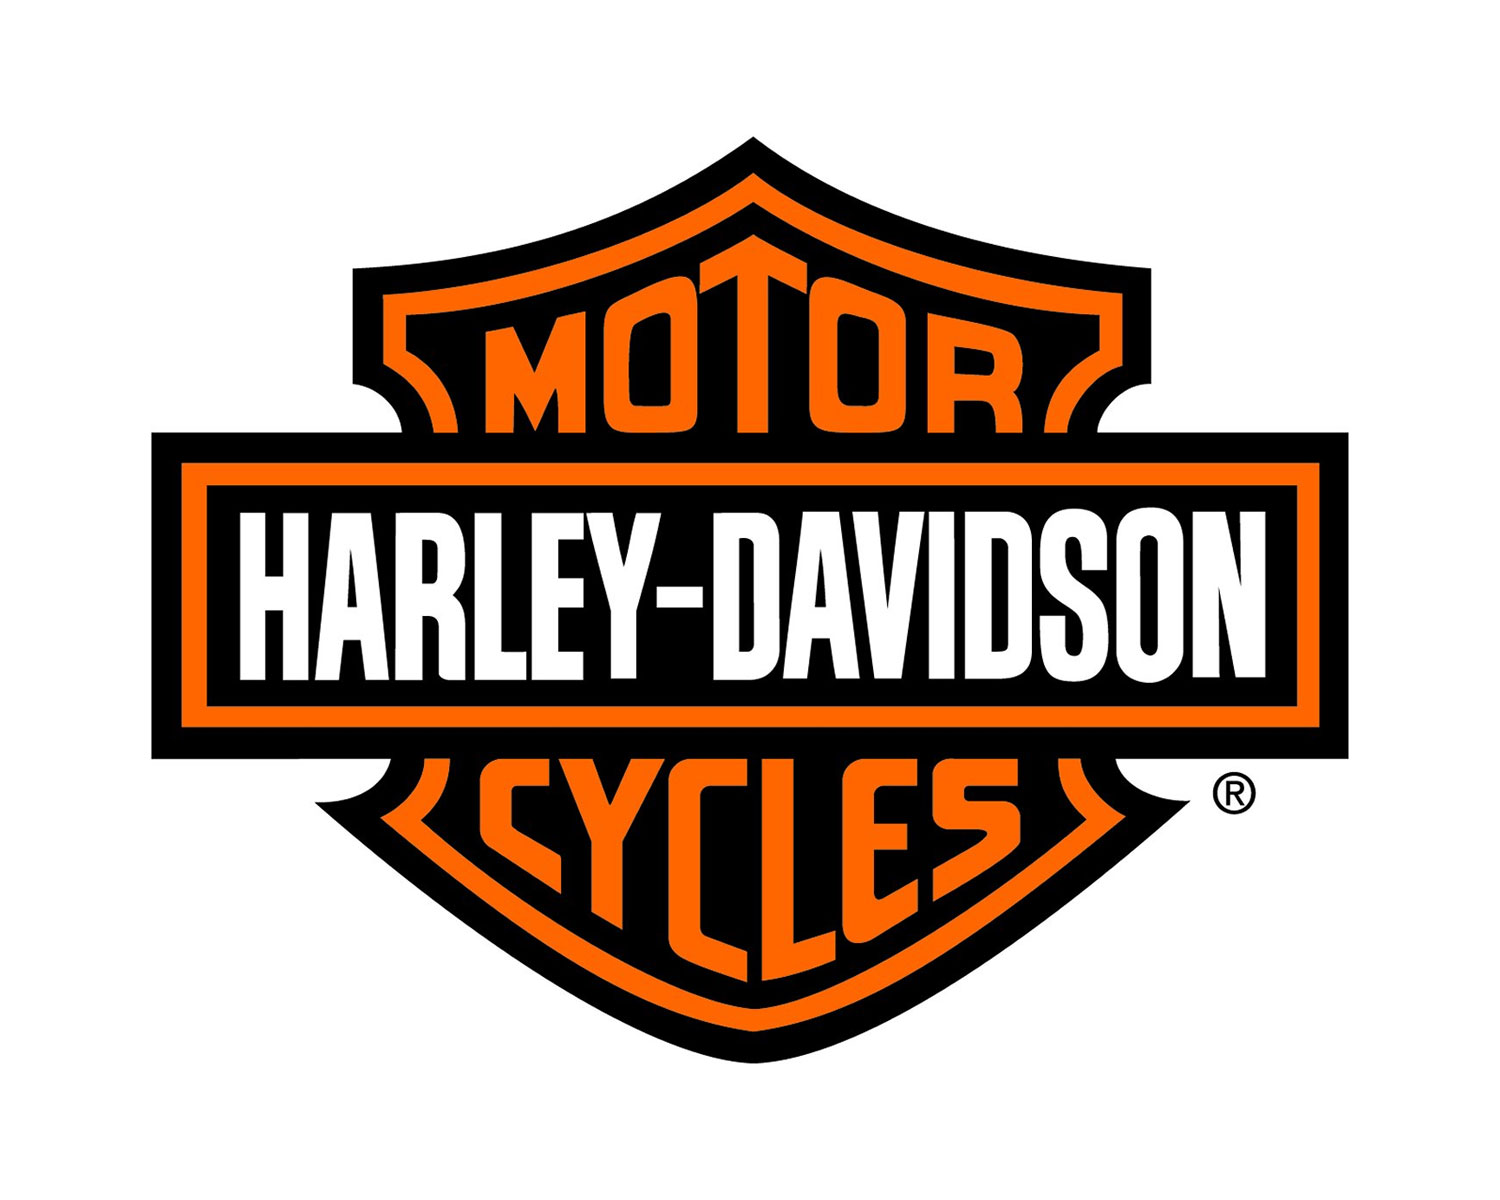 Il logo Harley-Davidson